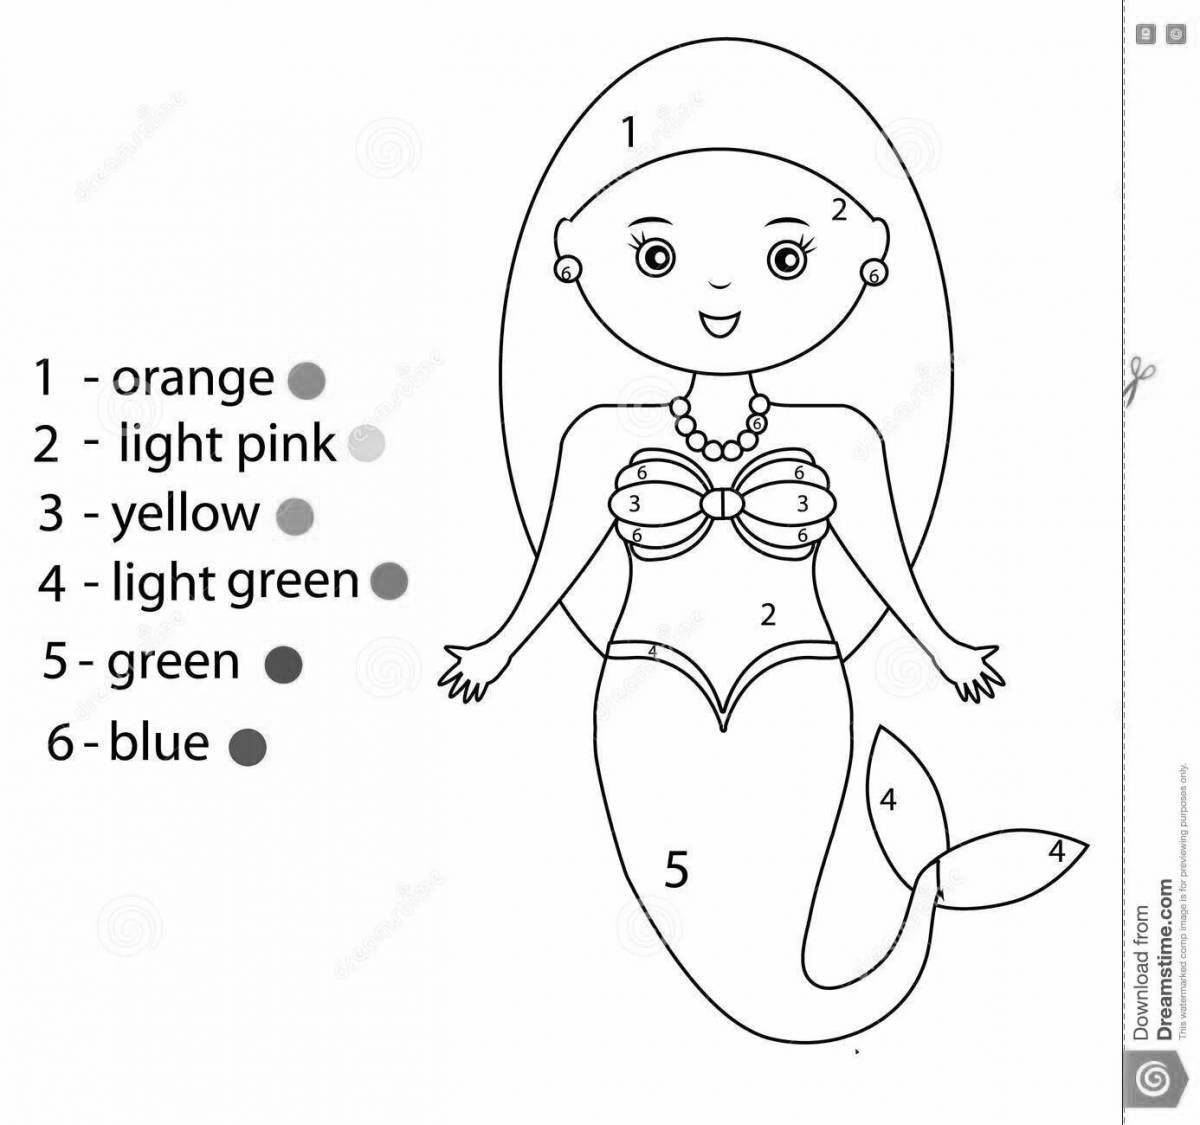 Colorful mermaid coloring by numbers